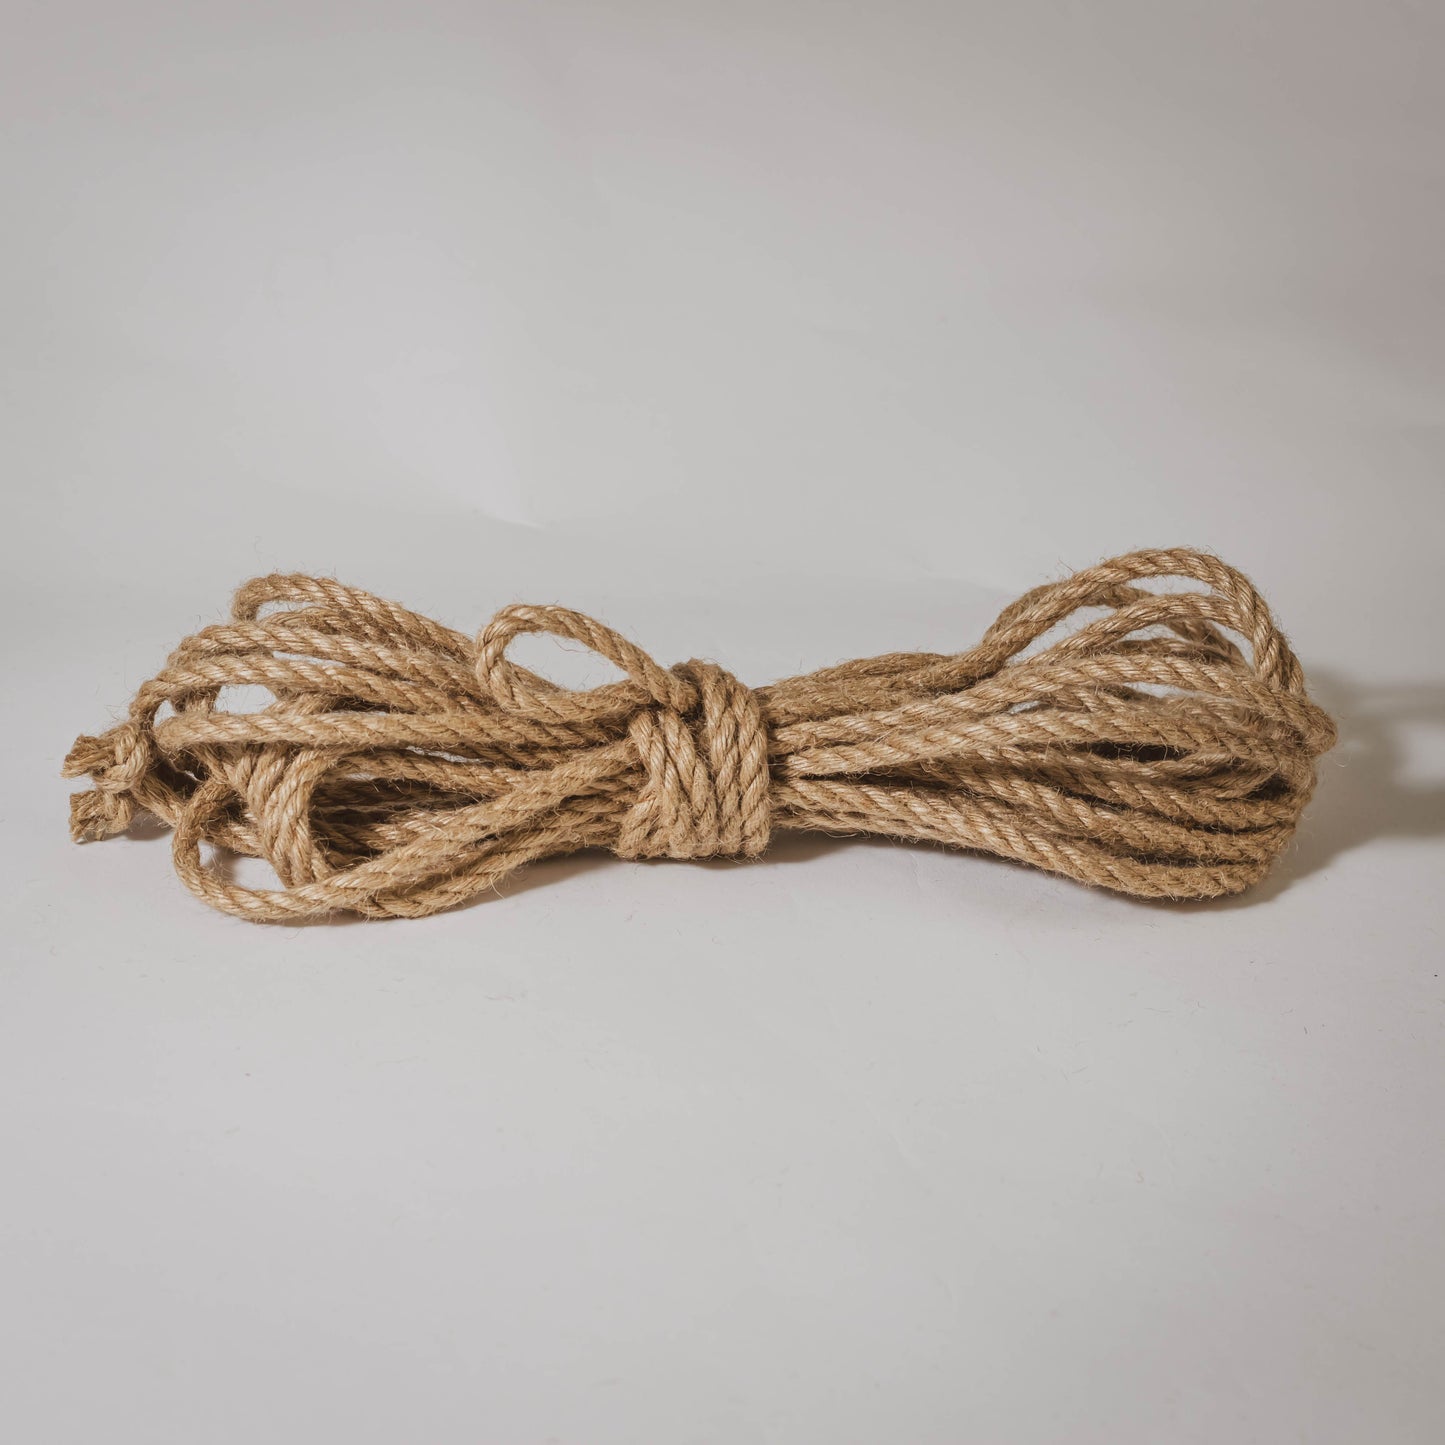 Untreated - 6mm Jute Rope Shibari Rope Single Length 